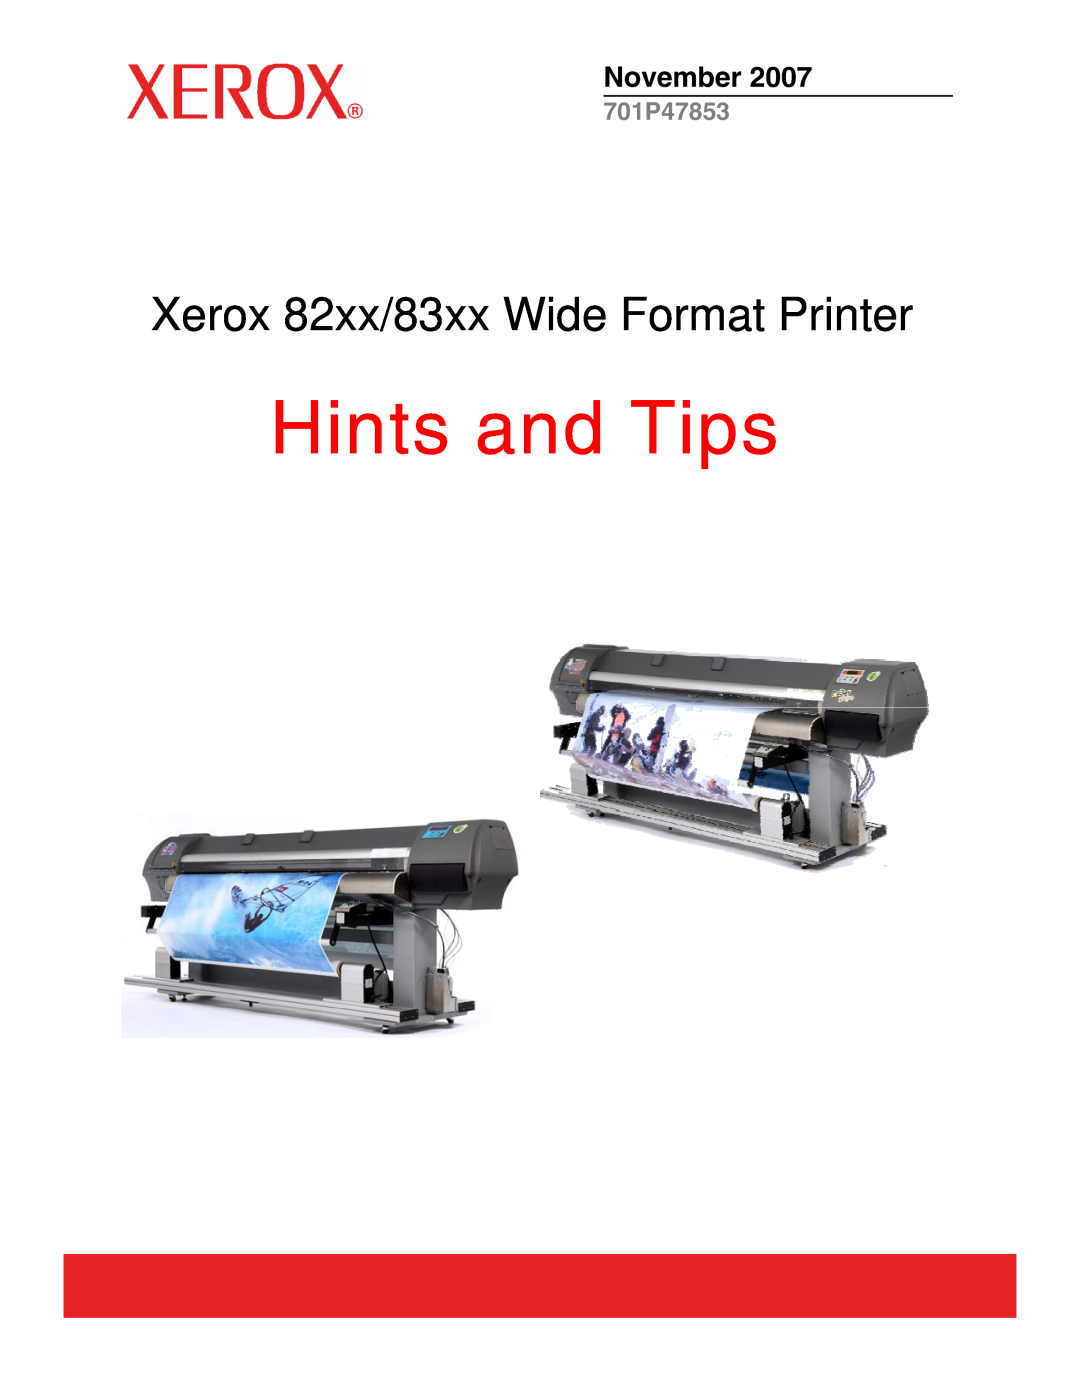 Xerox 701P47853 manual November, Hints and Tips, Xerox 82xx/83xx Wide Format Printer 